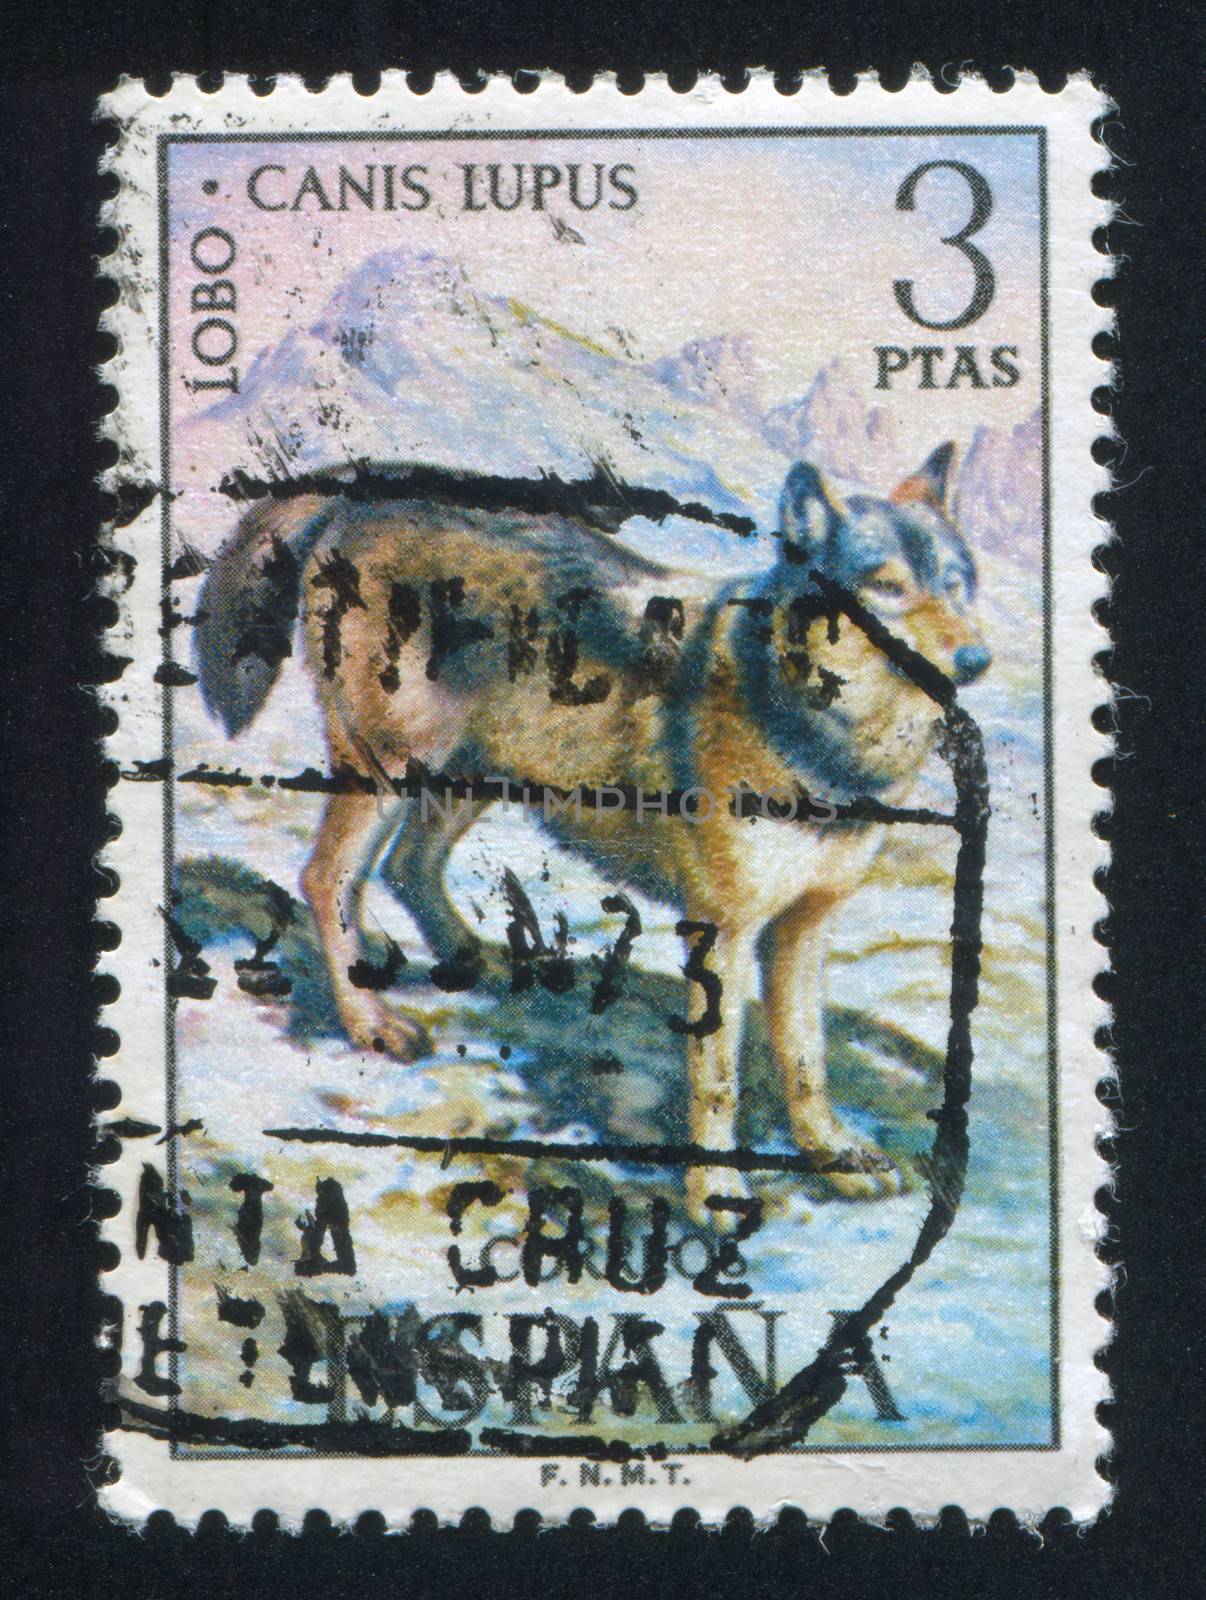 SPAIN - CIRCA 1972: stamp printed by Spain, shows Wolf, circa 1972